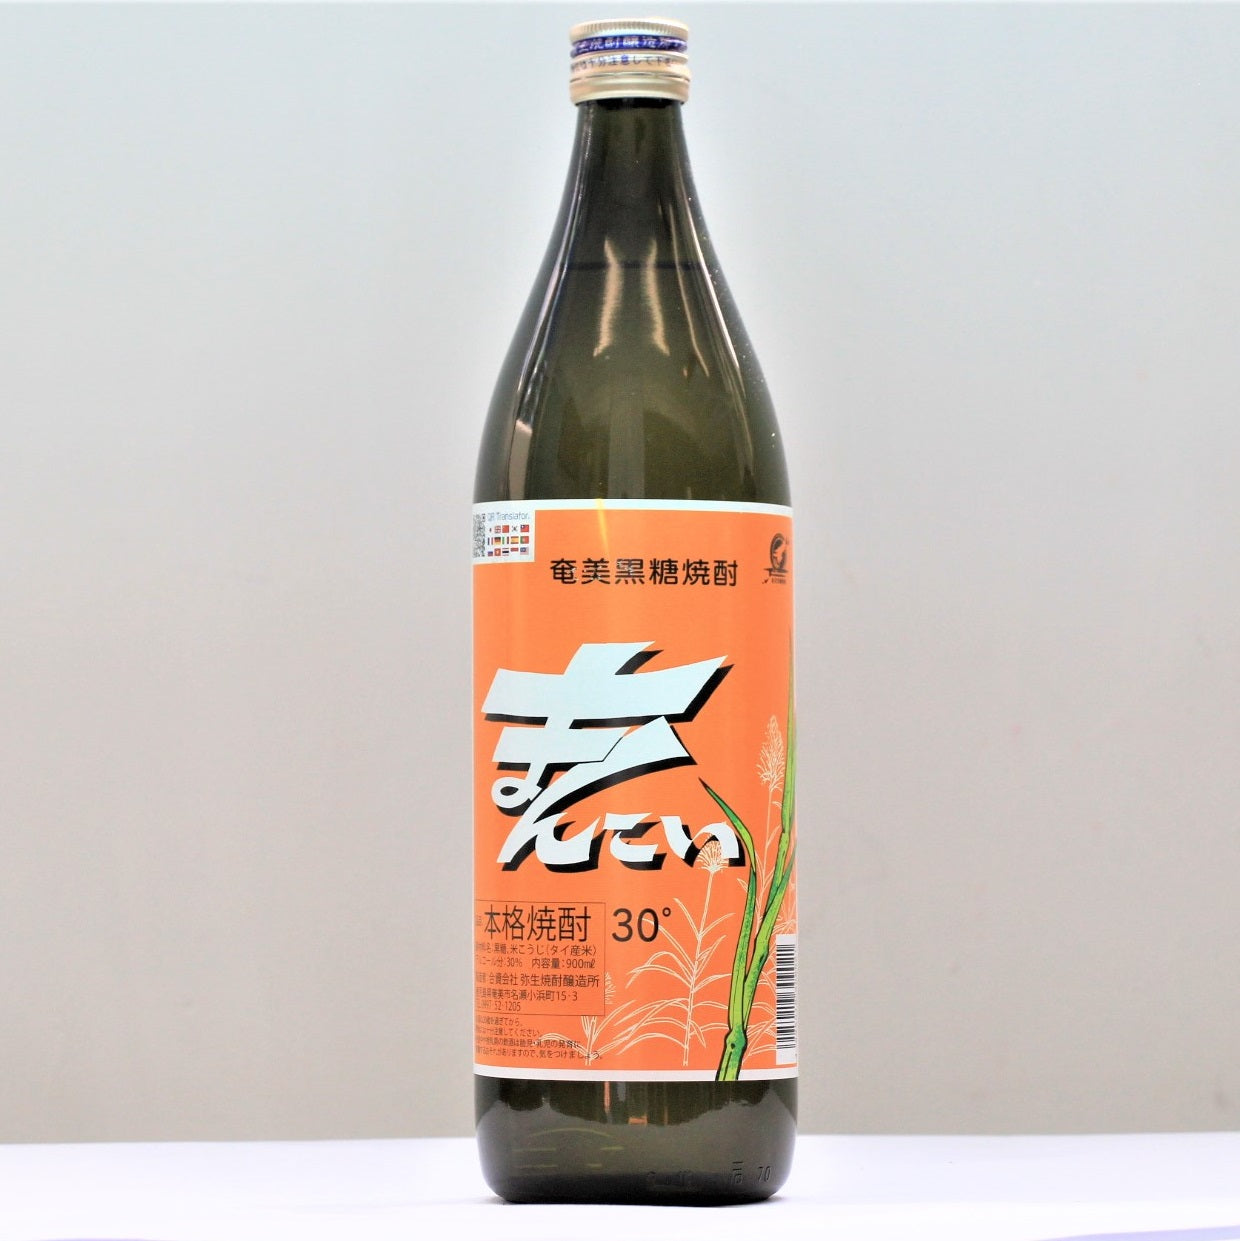 Mankoi “まんこい” 木桶陳釀單一蒸餾的黑糖本格燒酎 Cask Matured Single Distilled Honkaku Kokuto (Brown Sugar) Shochu